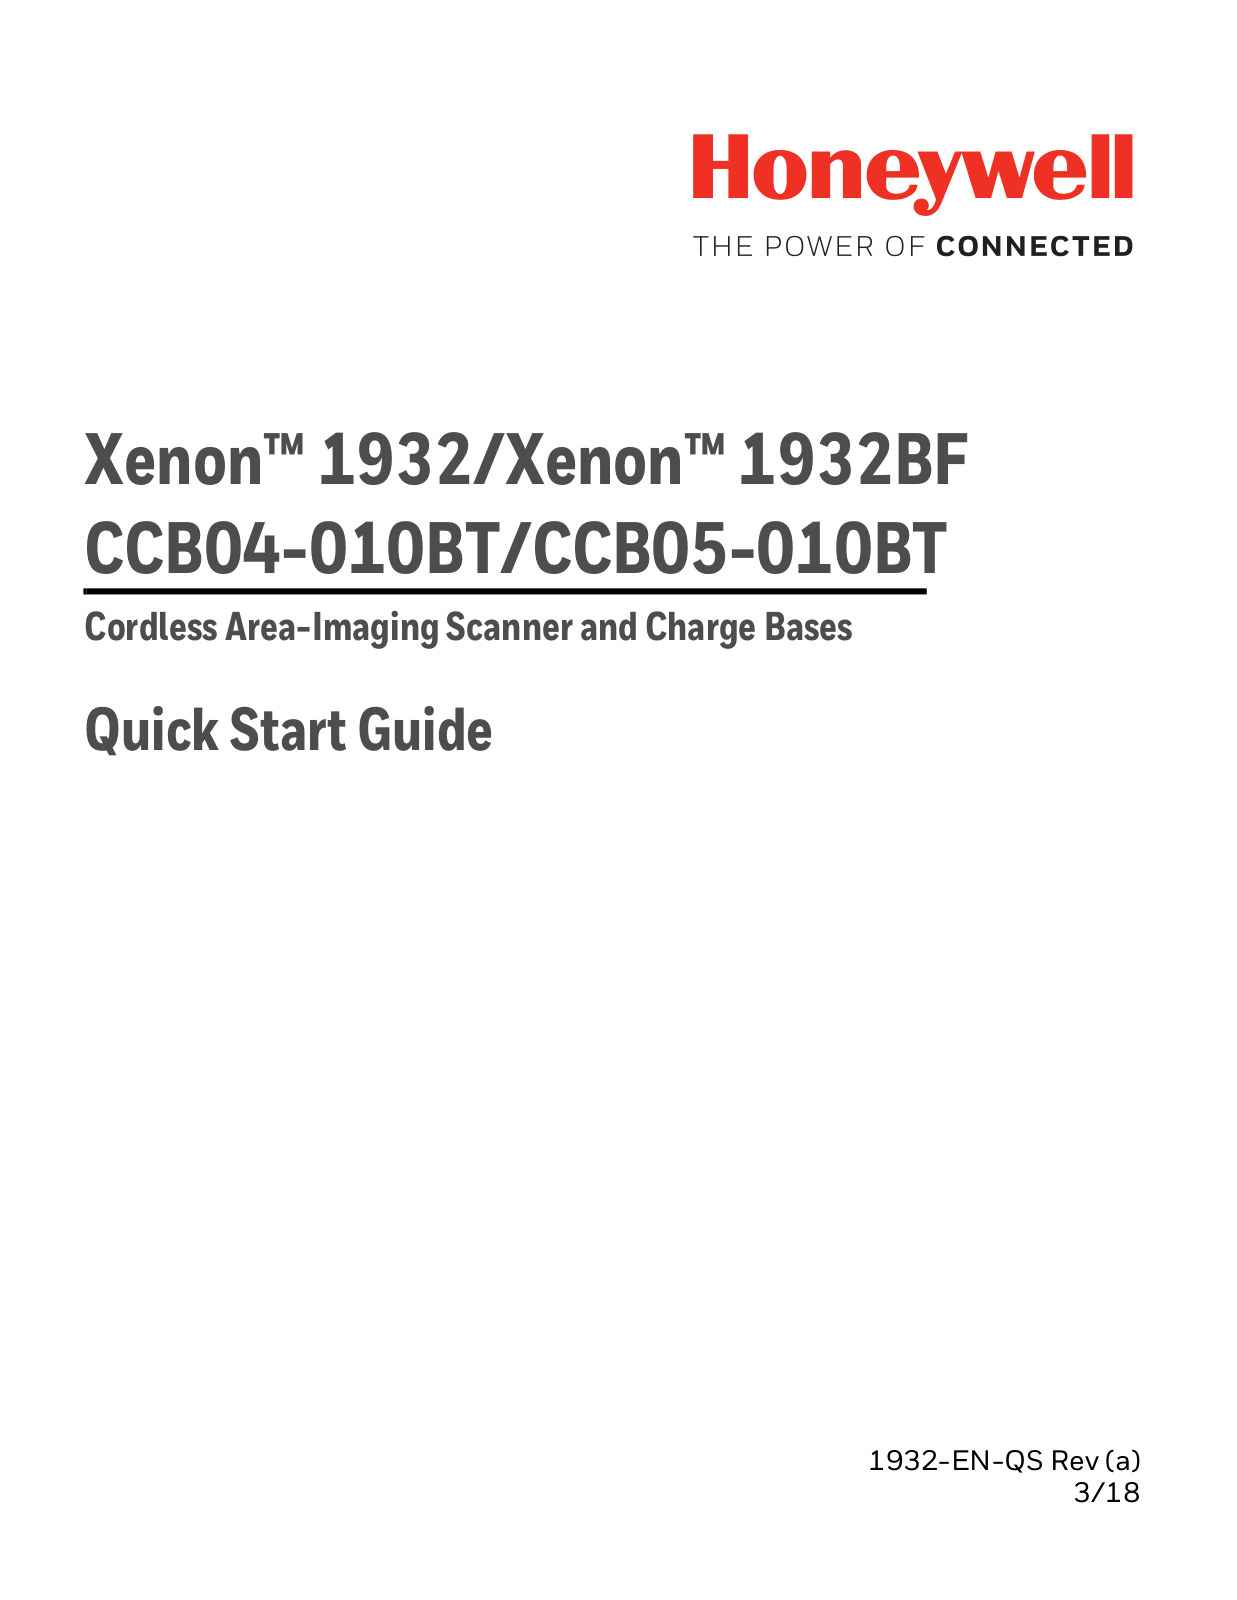 Honeywell CCB04A Users Manual